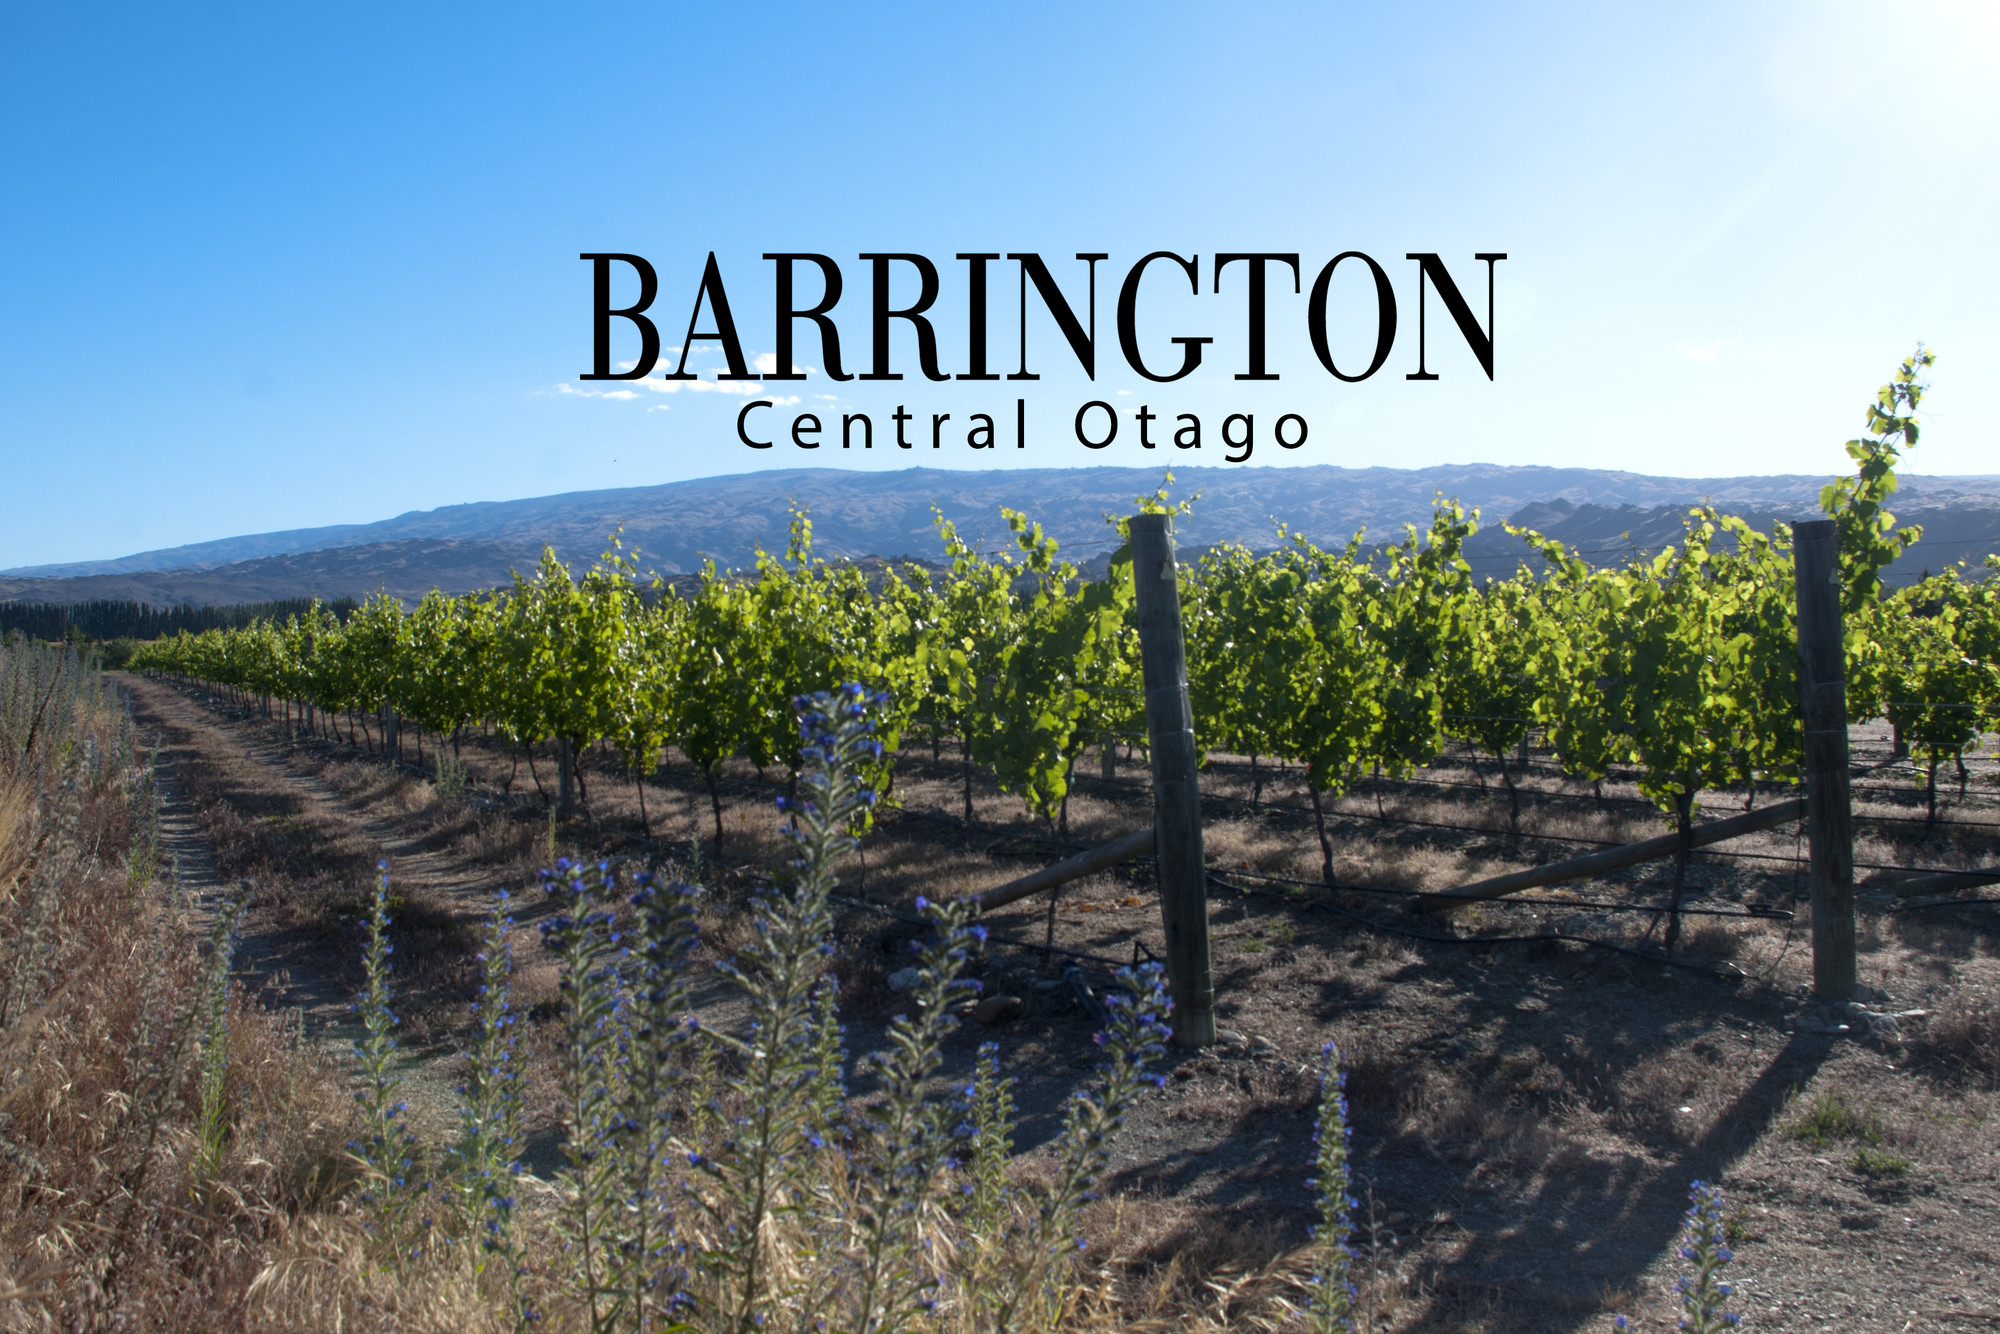 Barrington Wines in Central Otago